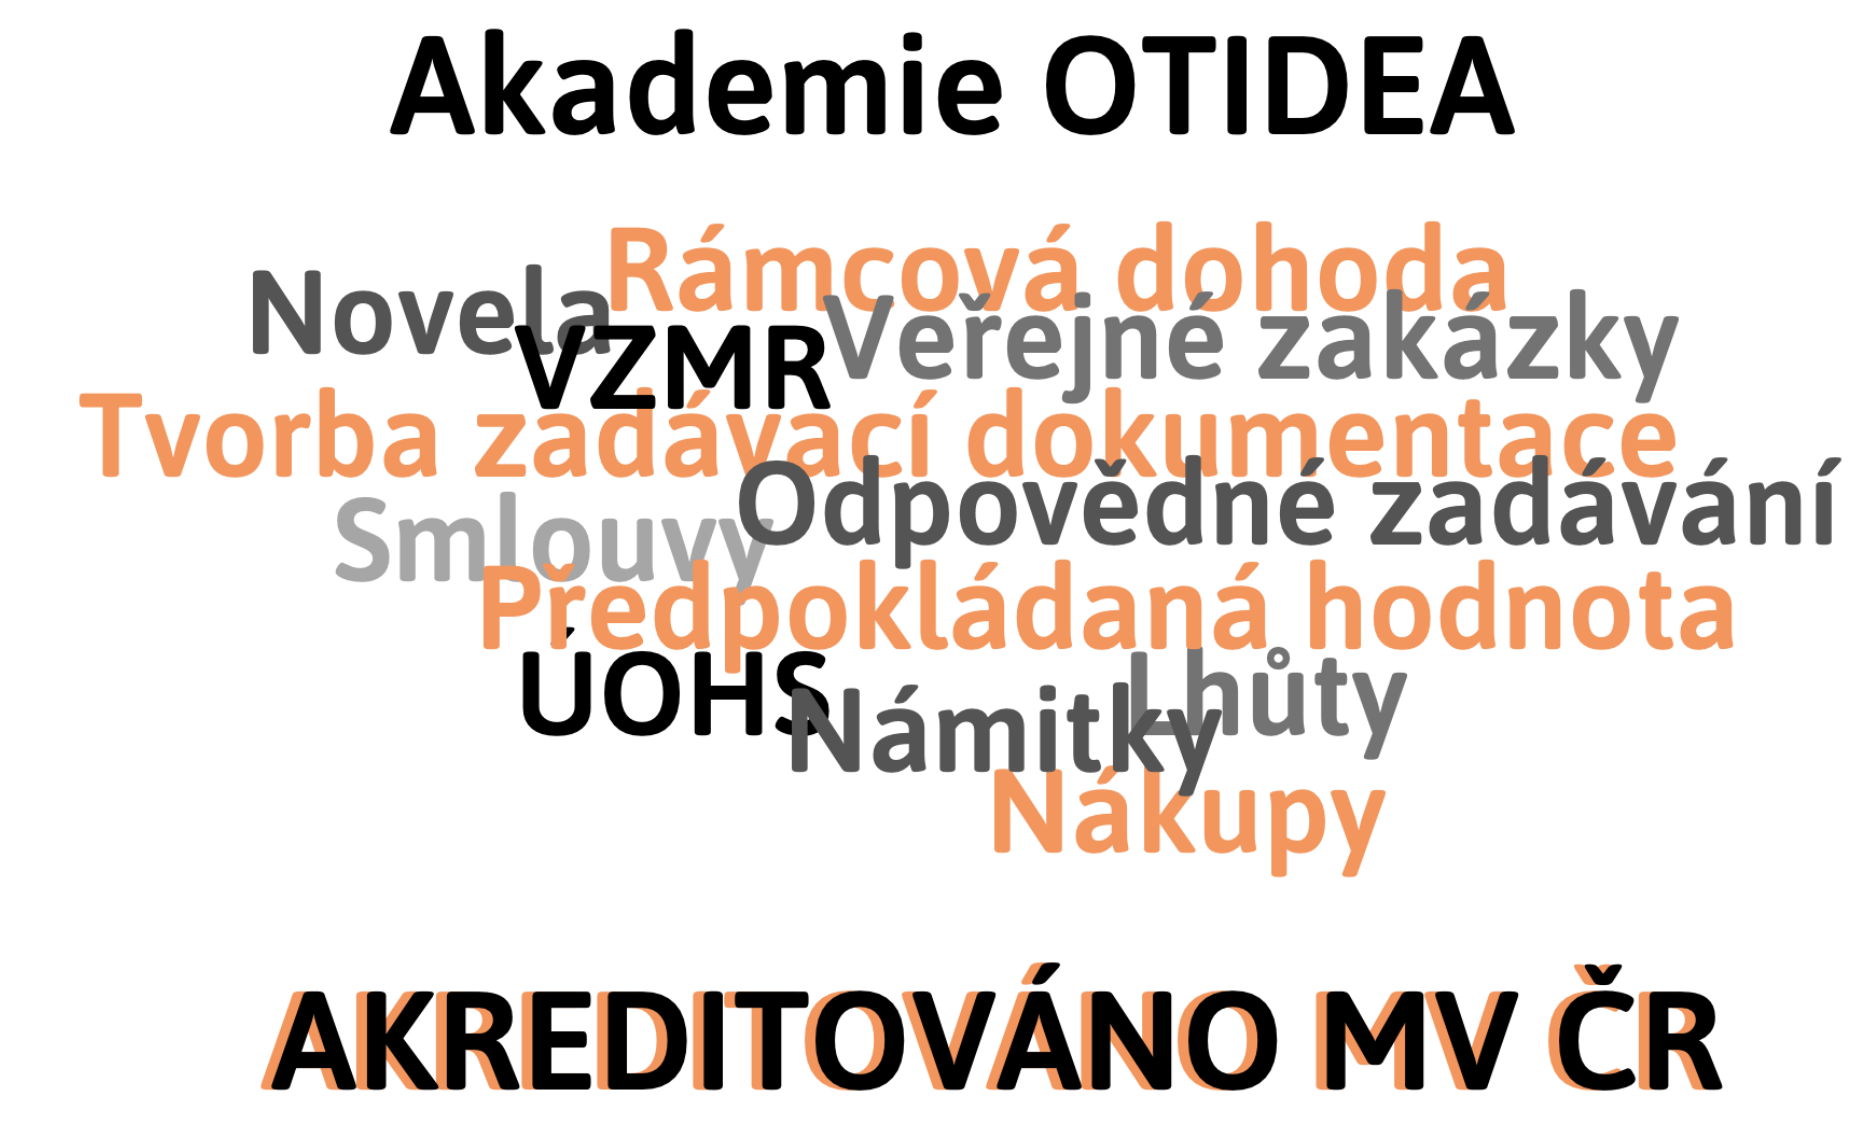 Akademie OTIDEA získala akreditaci Ministerstva vnitra